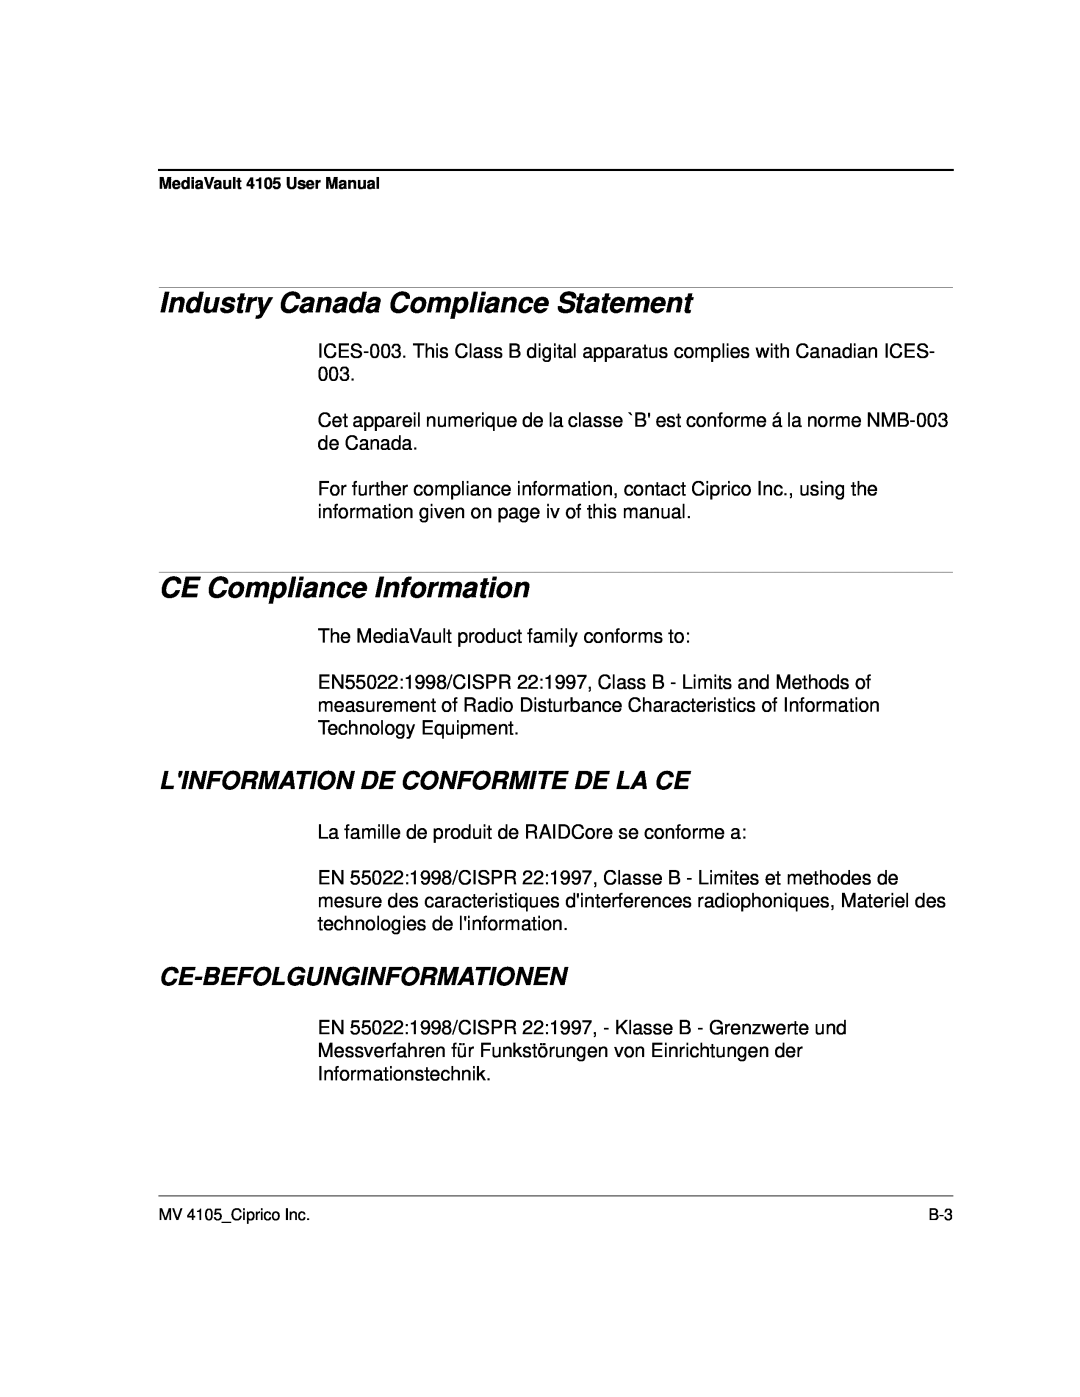 Ciprico 4105 Series Industry Canada Compliance Statement, CE Compliance Information, Linformation De Conformite De La Ce 